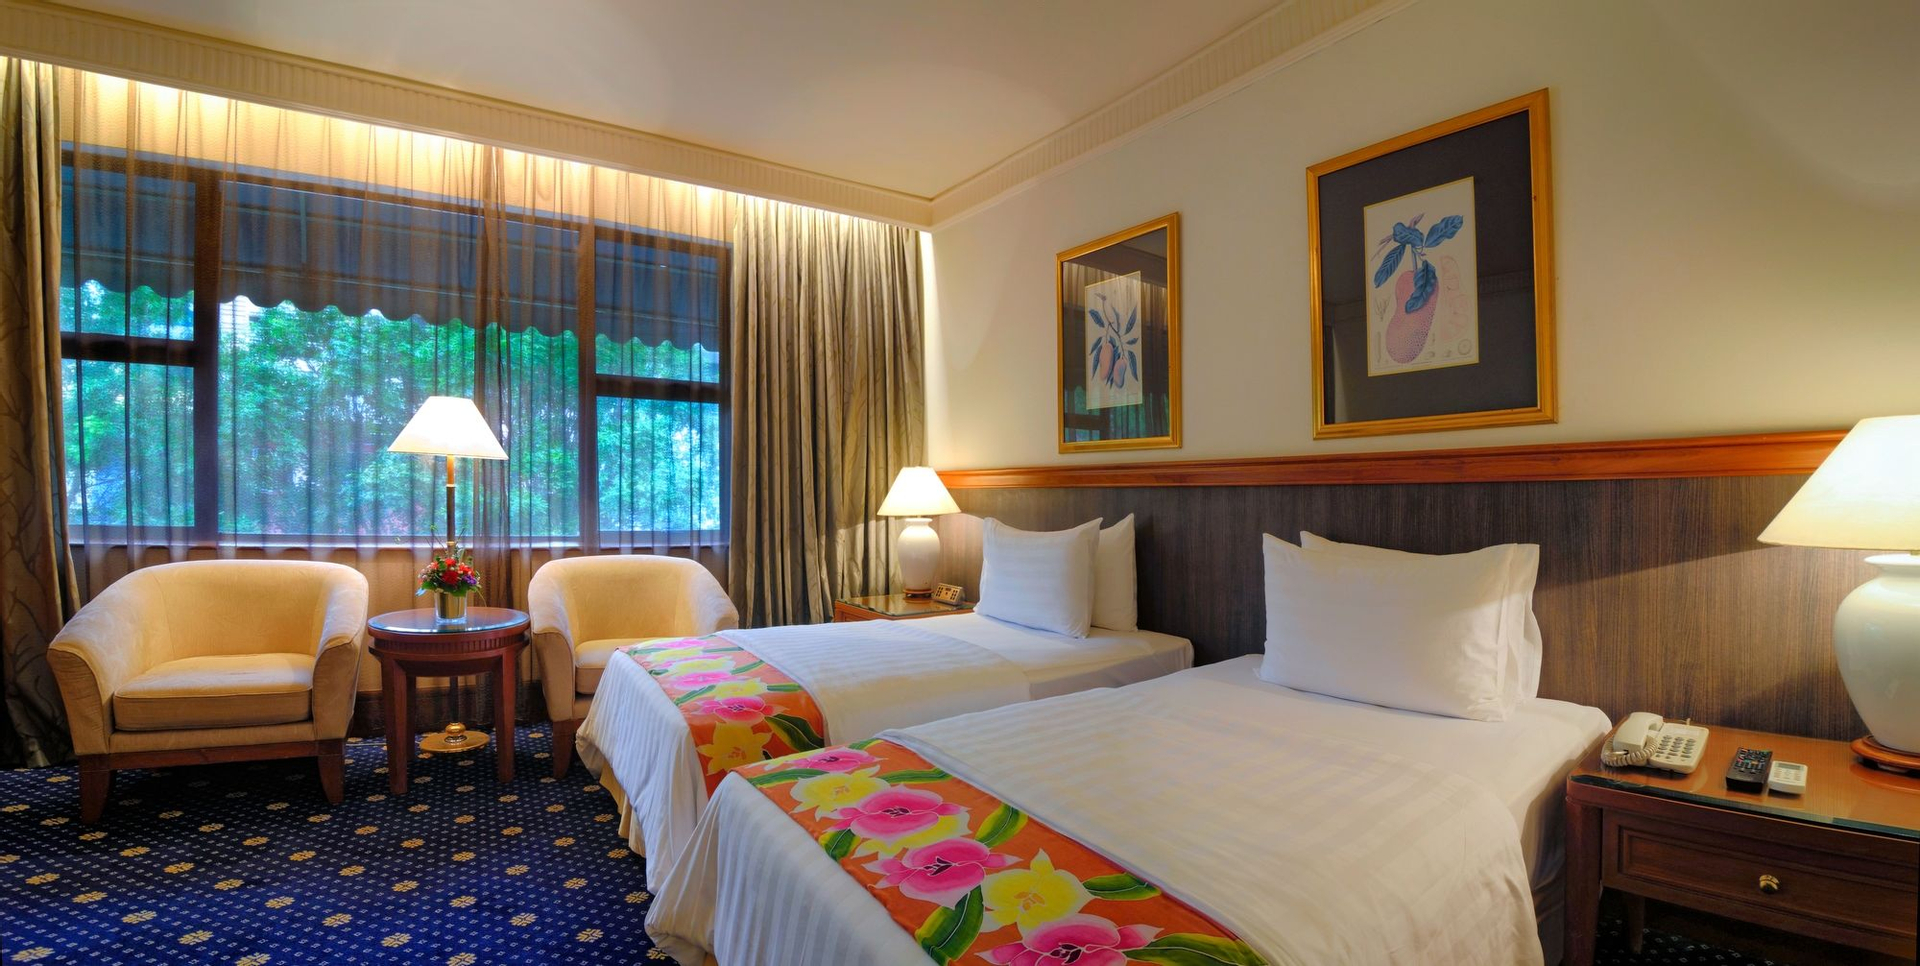 Bedroom 3, The Jesselton Hotel, Kota Kinabalu